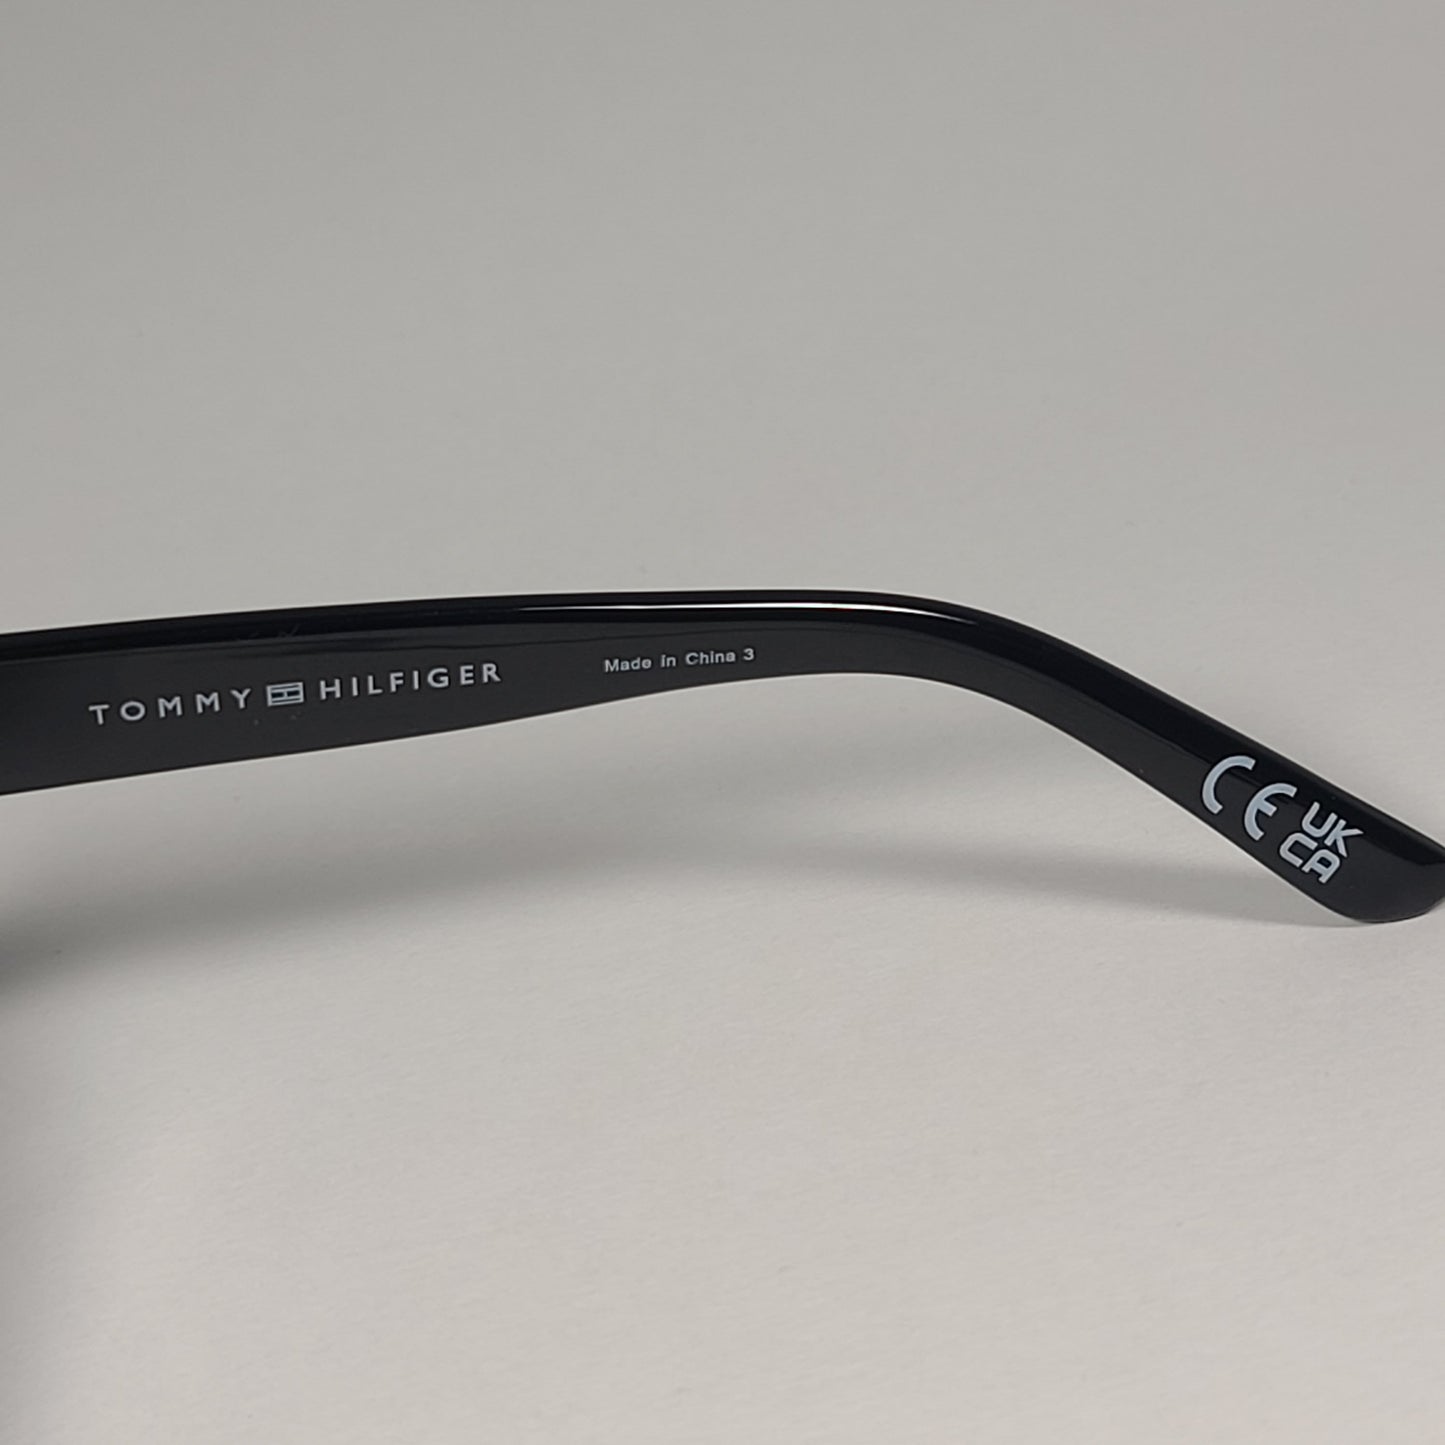 Tommy Hilfiger Miley WP OL567 Sunglasses Shiny Black Frame Smoke Gradient Lens - Sunglasses